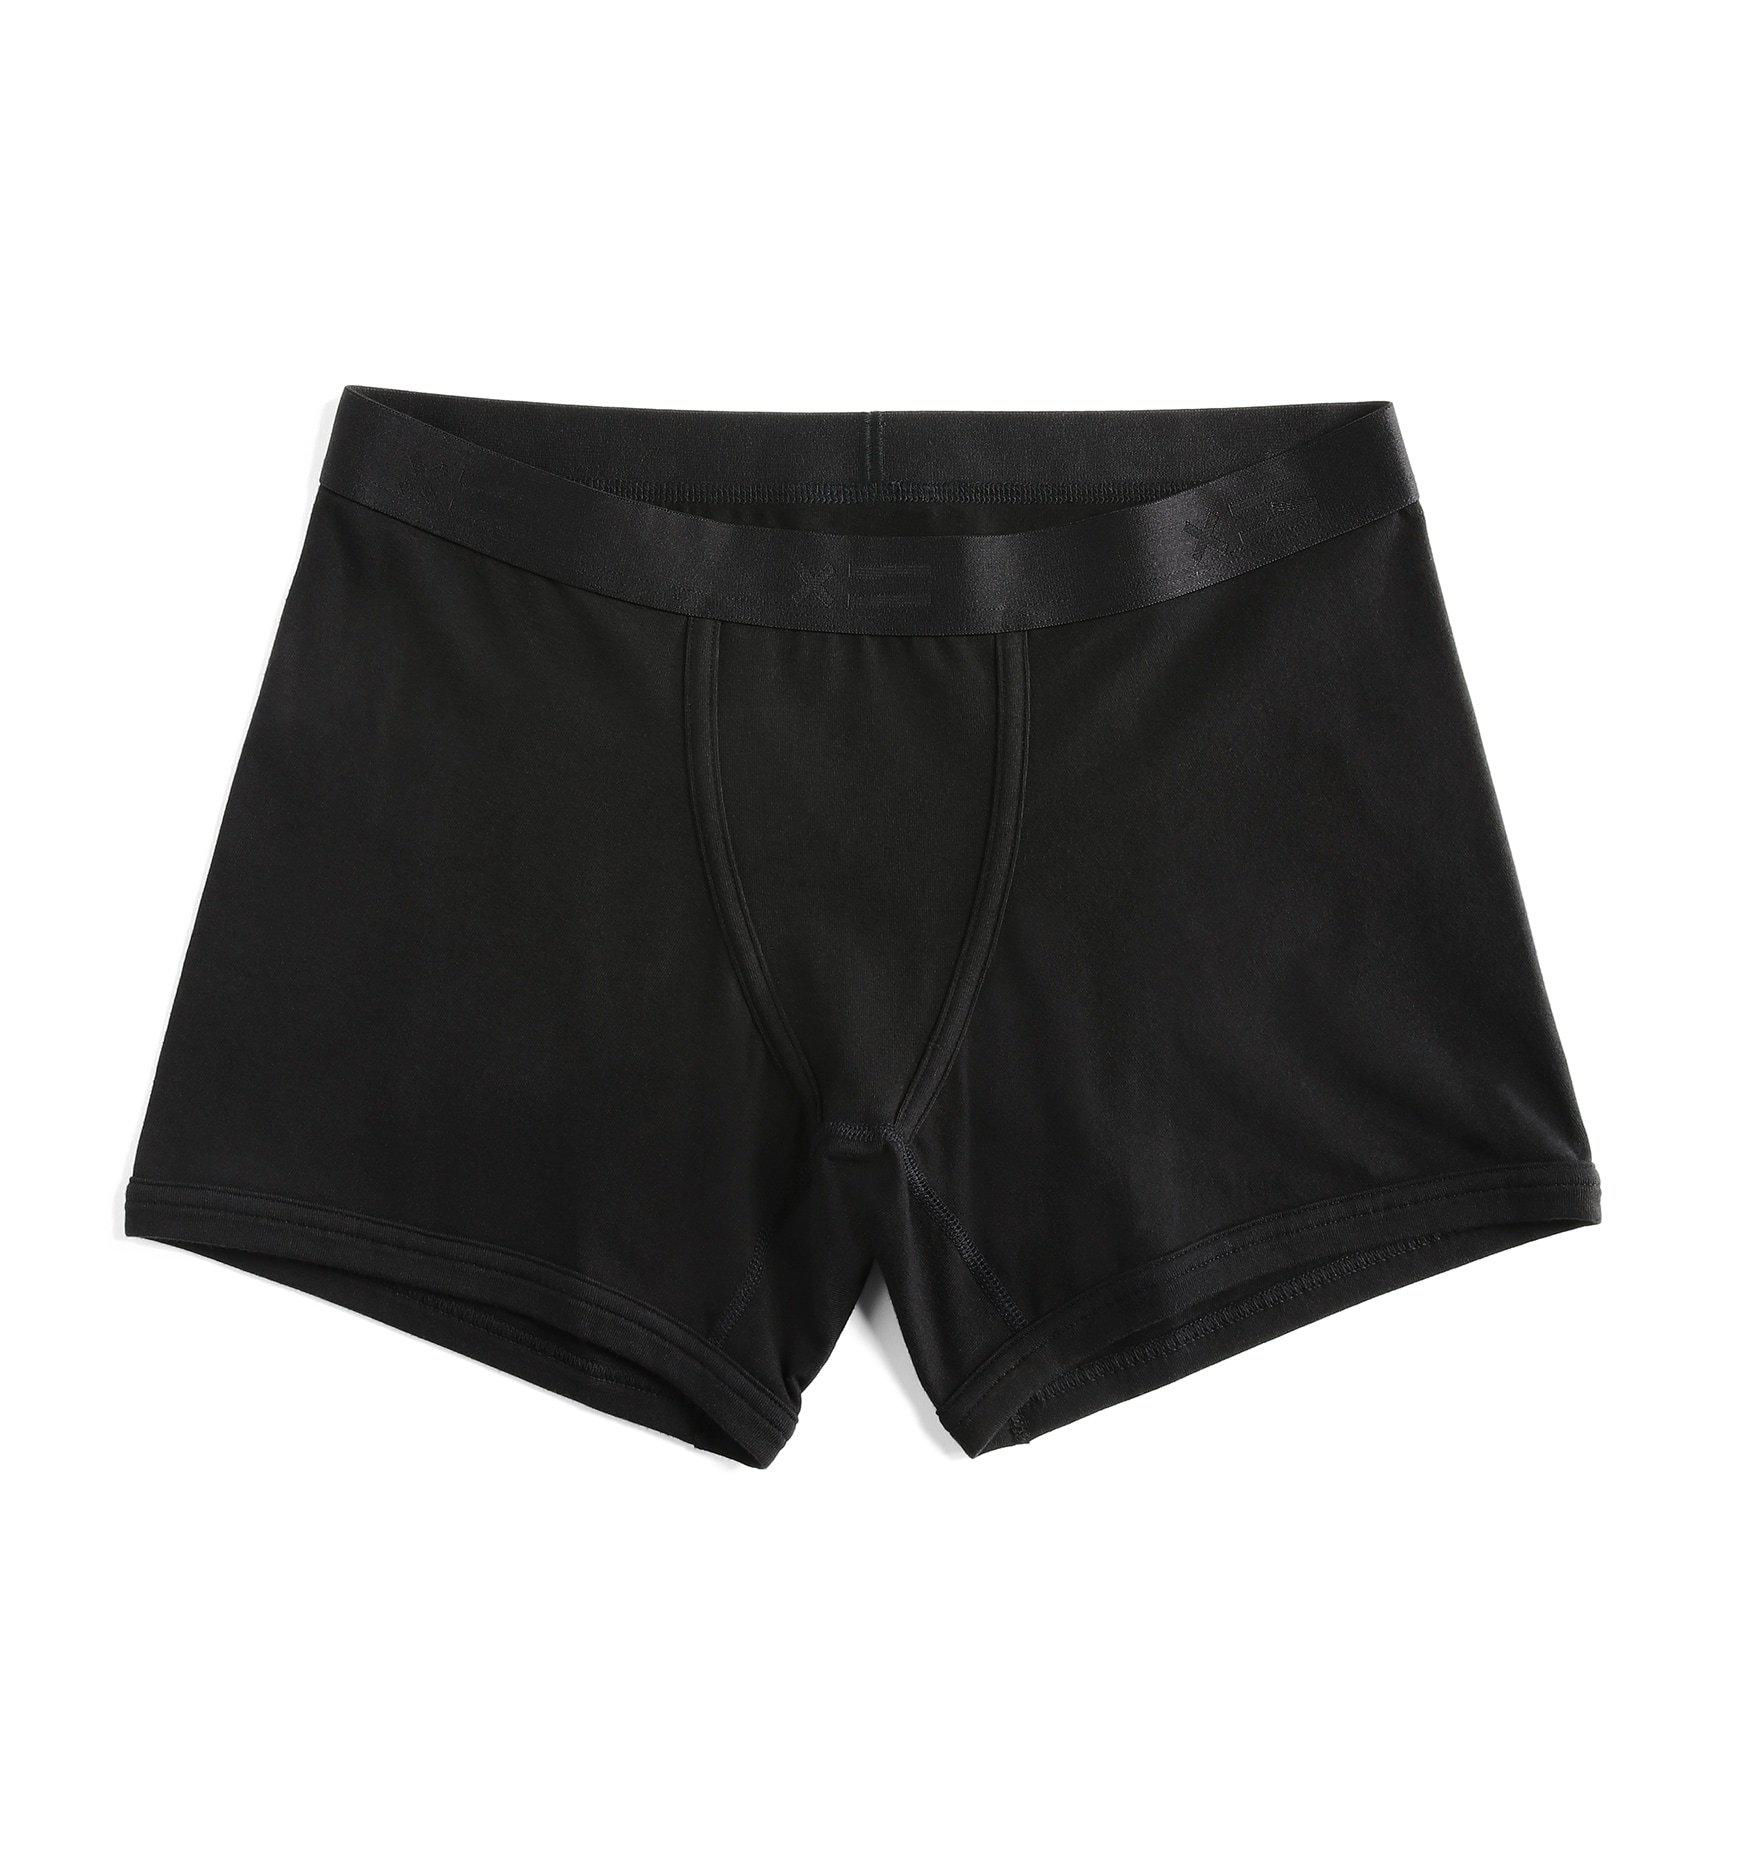 4.5" Trunks - X= Black-Underwear-TomboyX